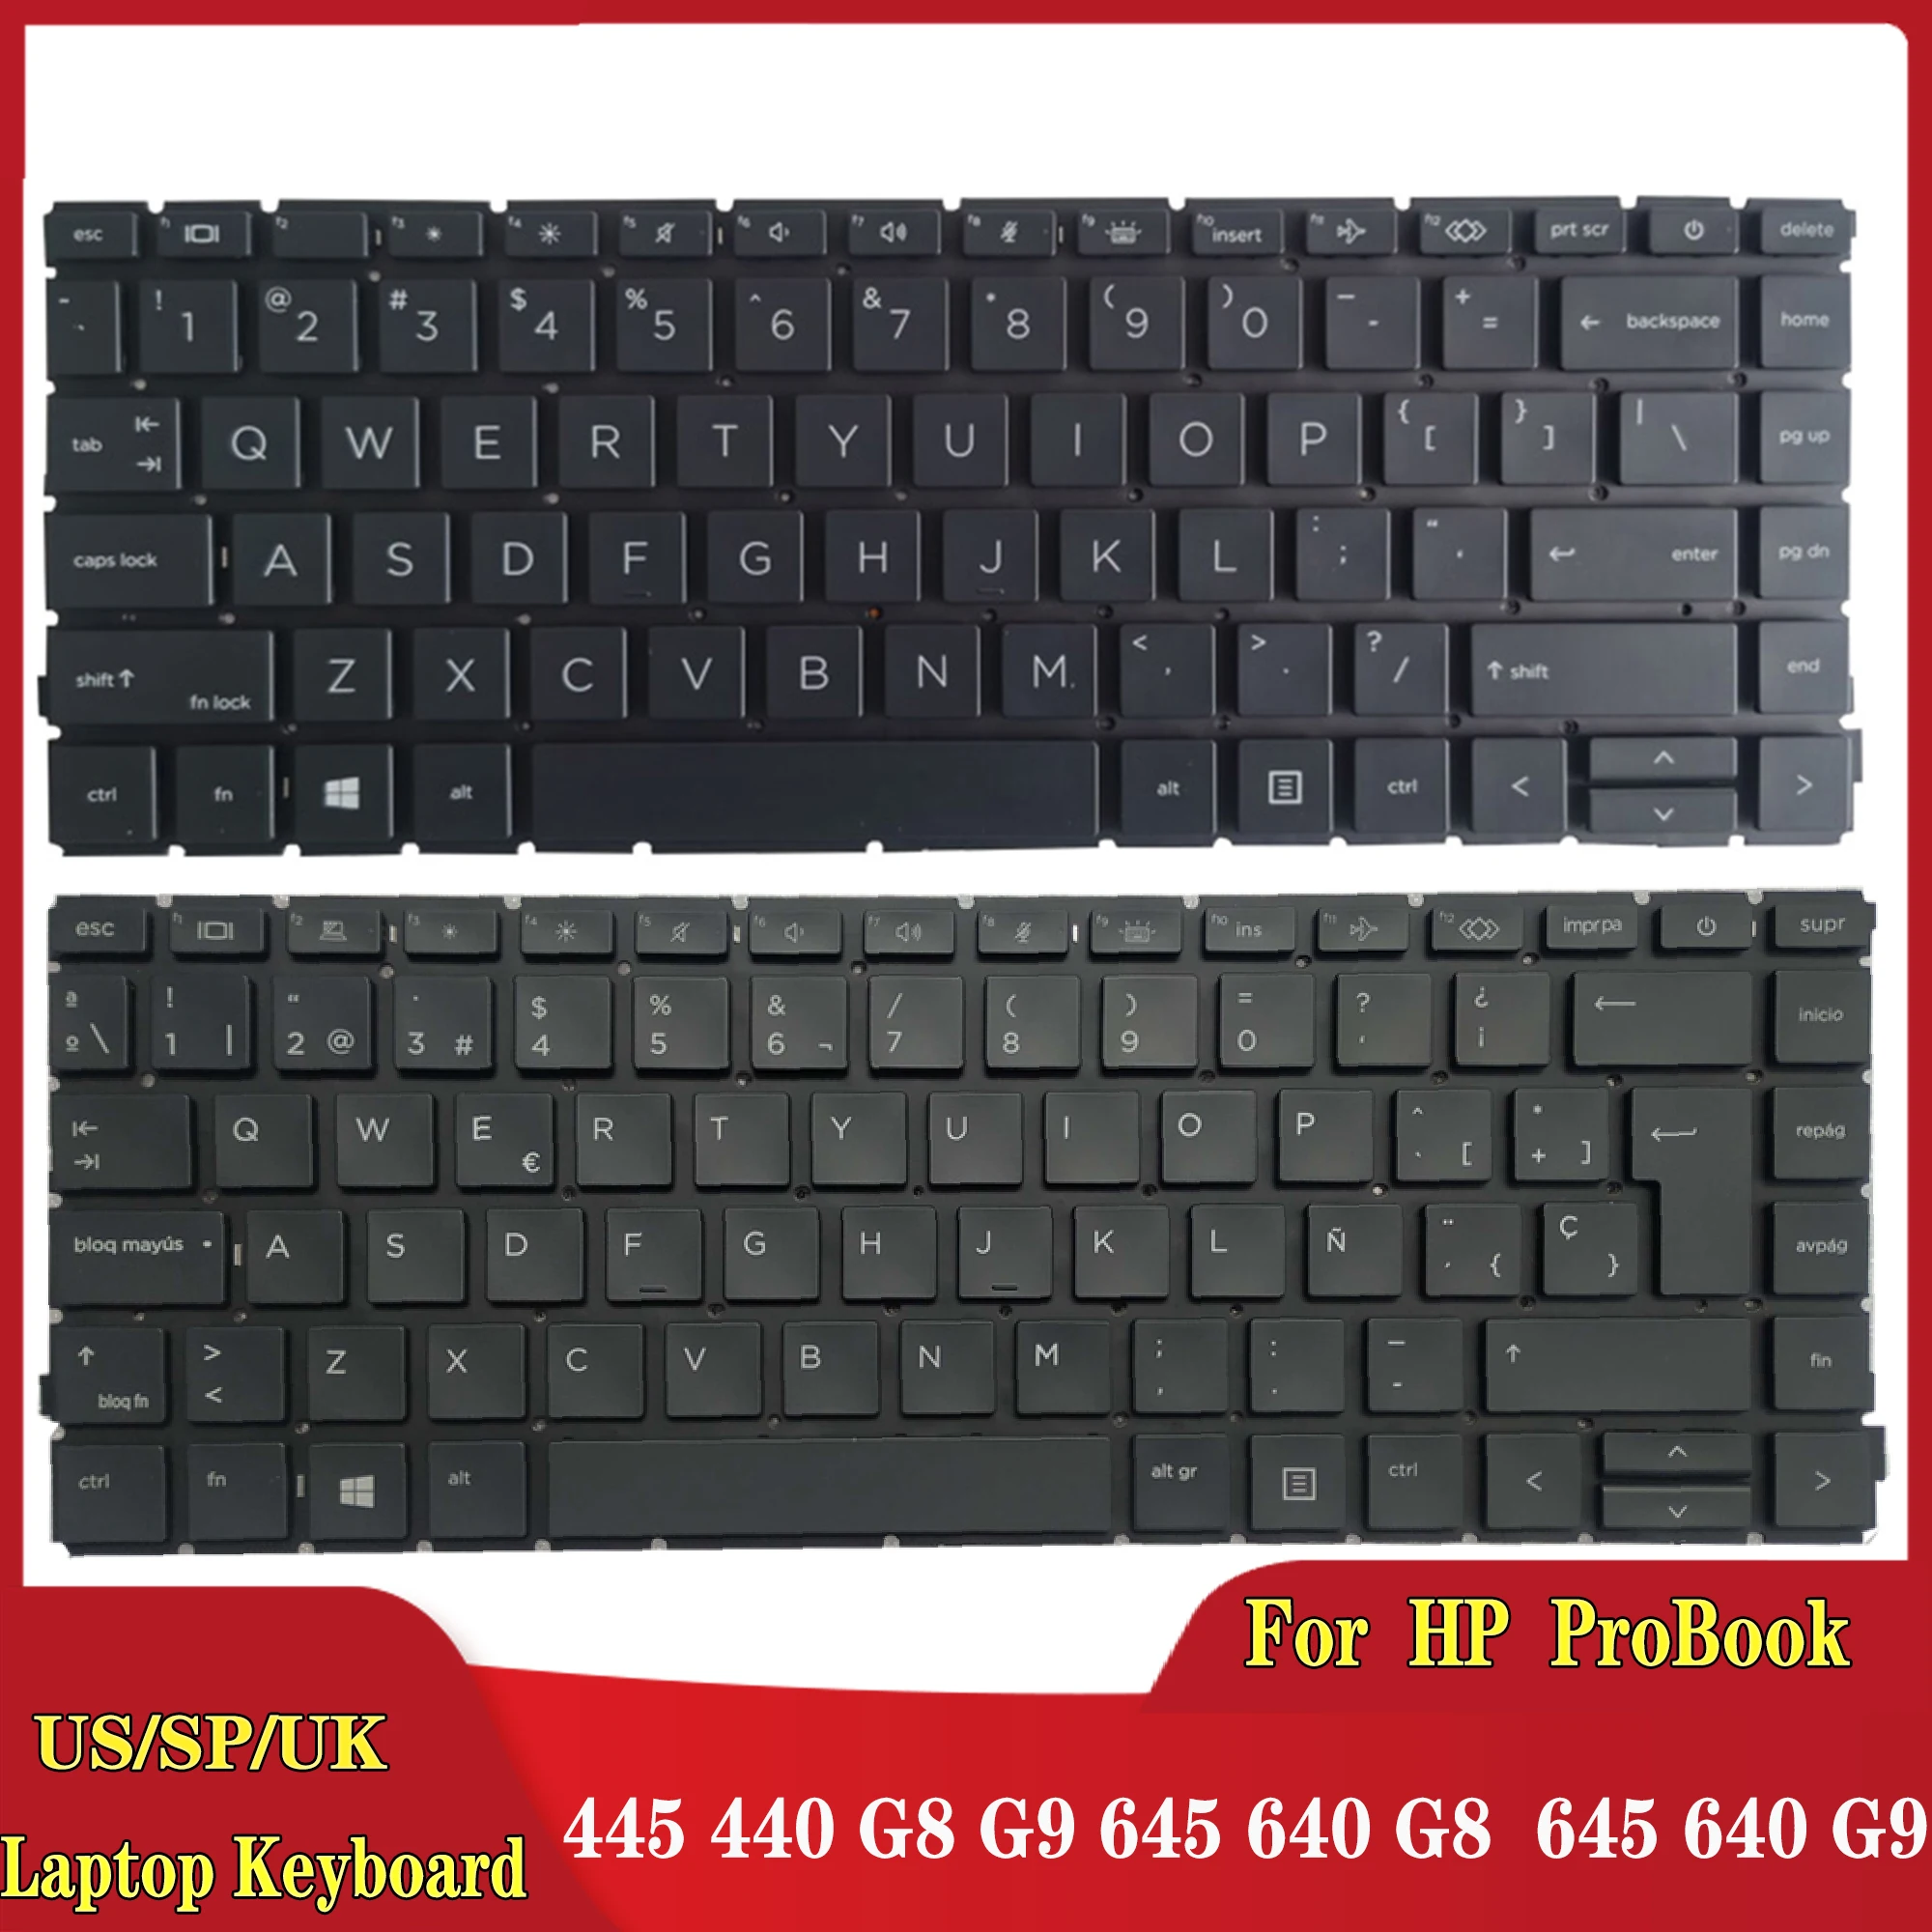 

NEW US/UK/Spanish SP/Latin Laptop keyboard FOR HP ProBook 445 440 G8 G9 645 640 G8 for EliteBook 645 640 G9